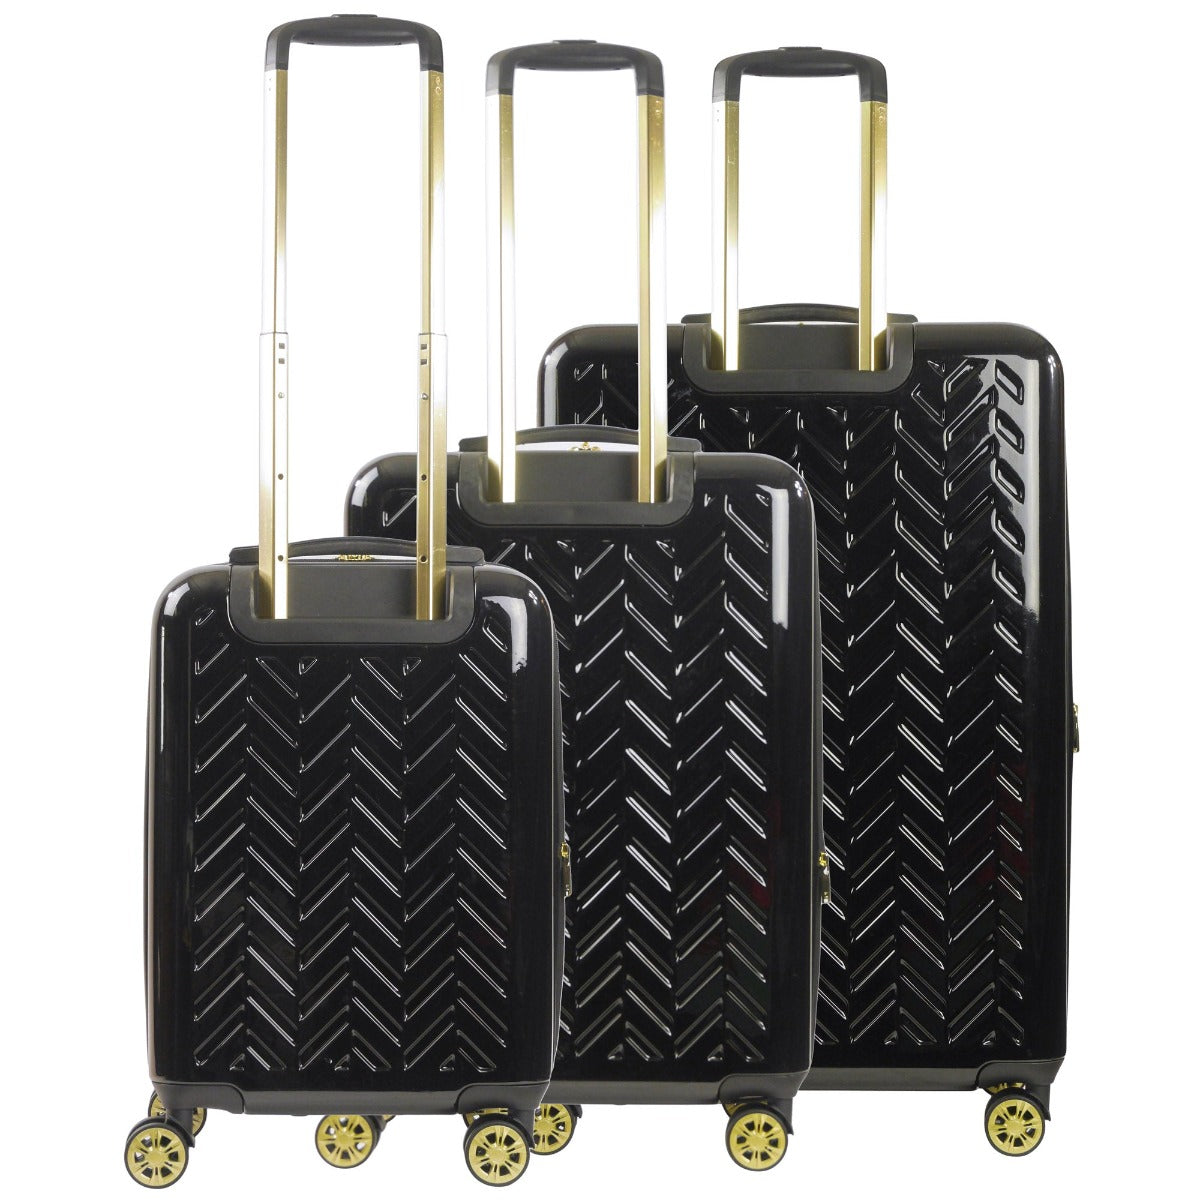 Ful Groove Hardside Spinner Suitcase 3 Pc Luggage Set Black